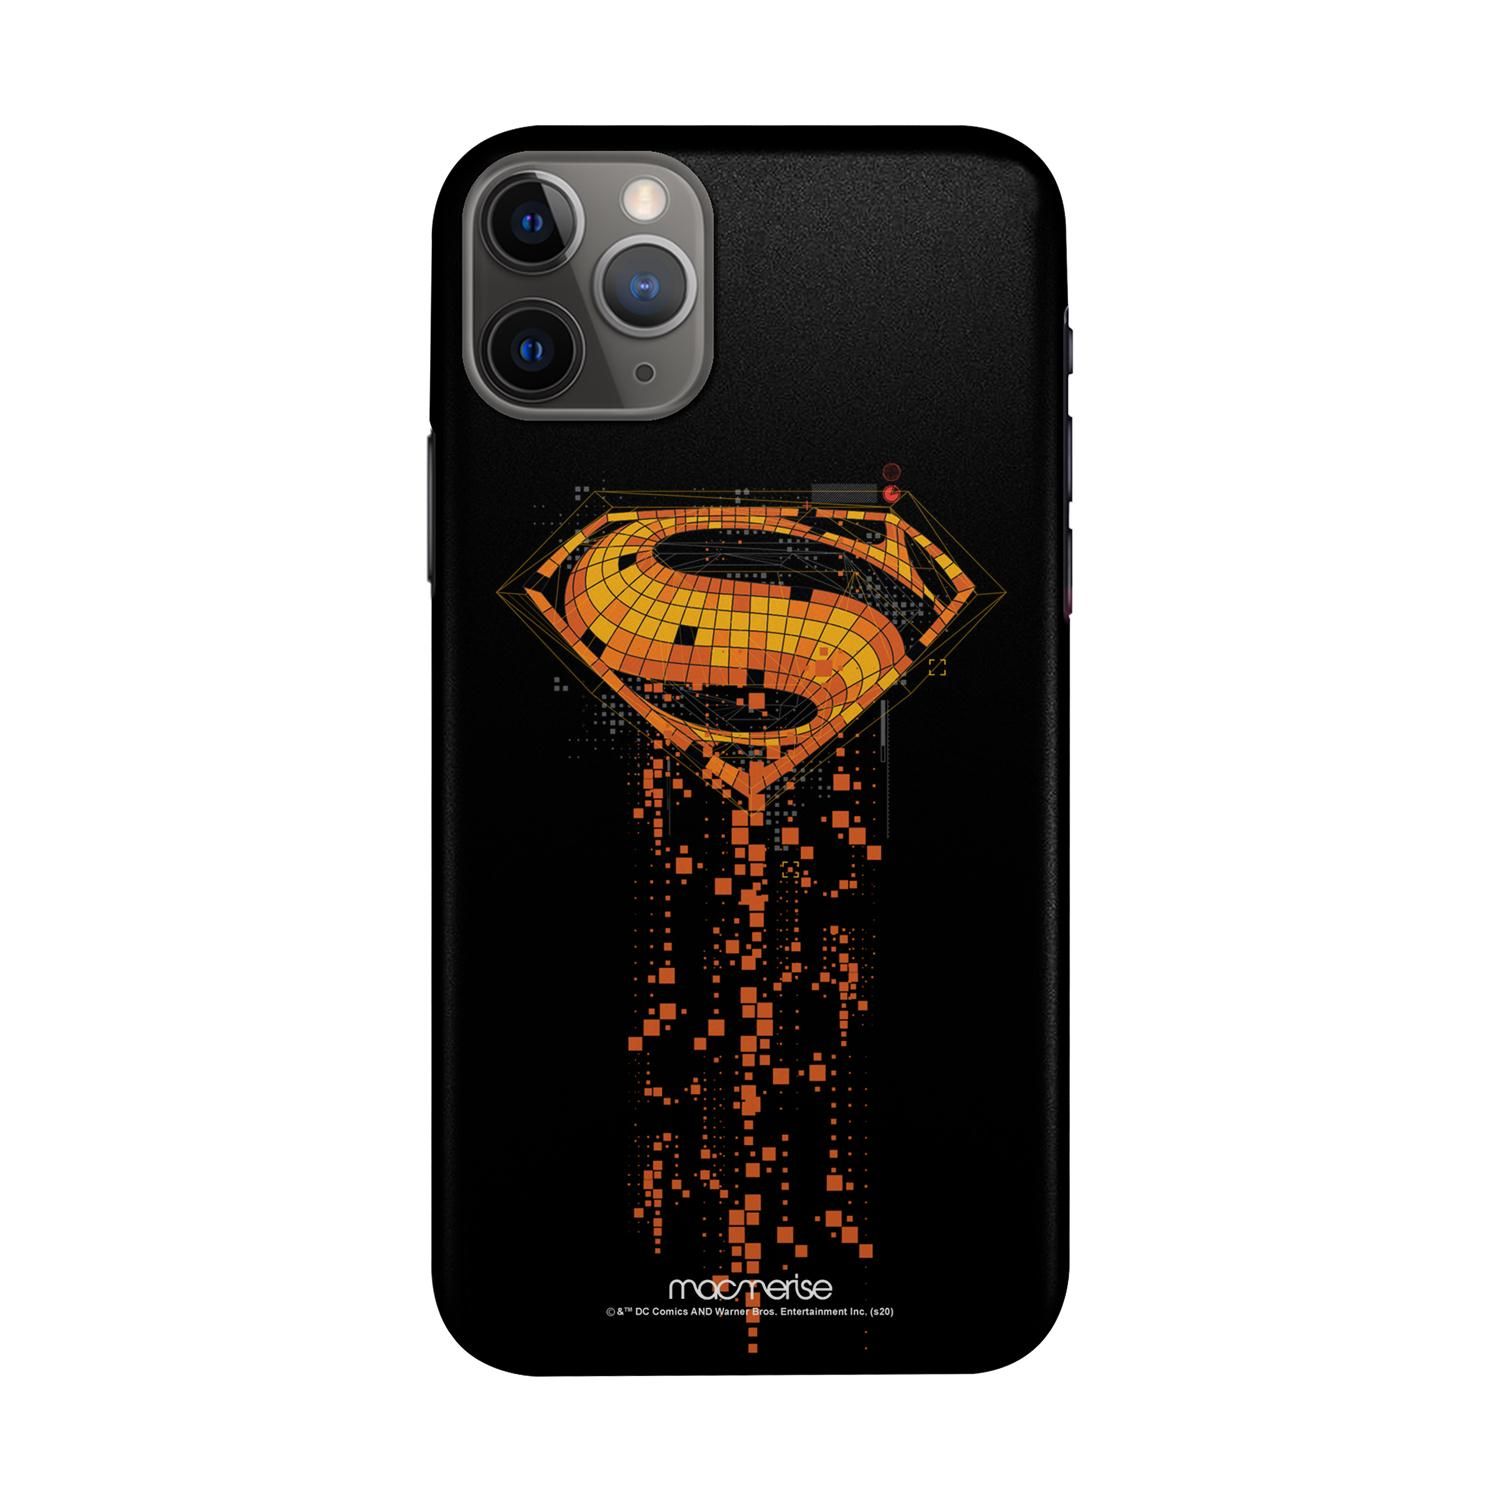 Buy Superman Mosaic - Sleek Phone Case for iPhone 11 Pro Online